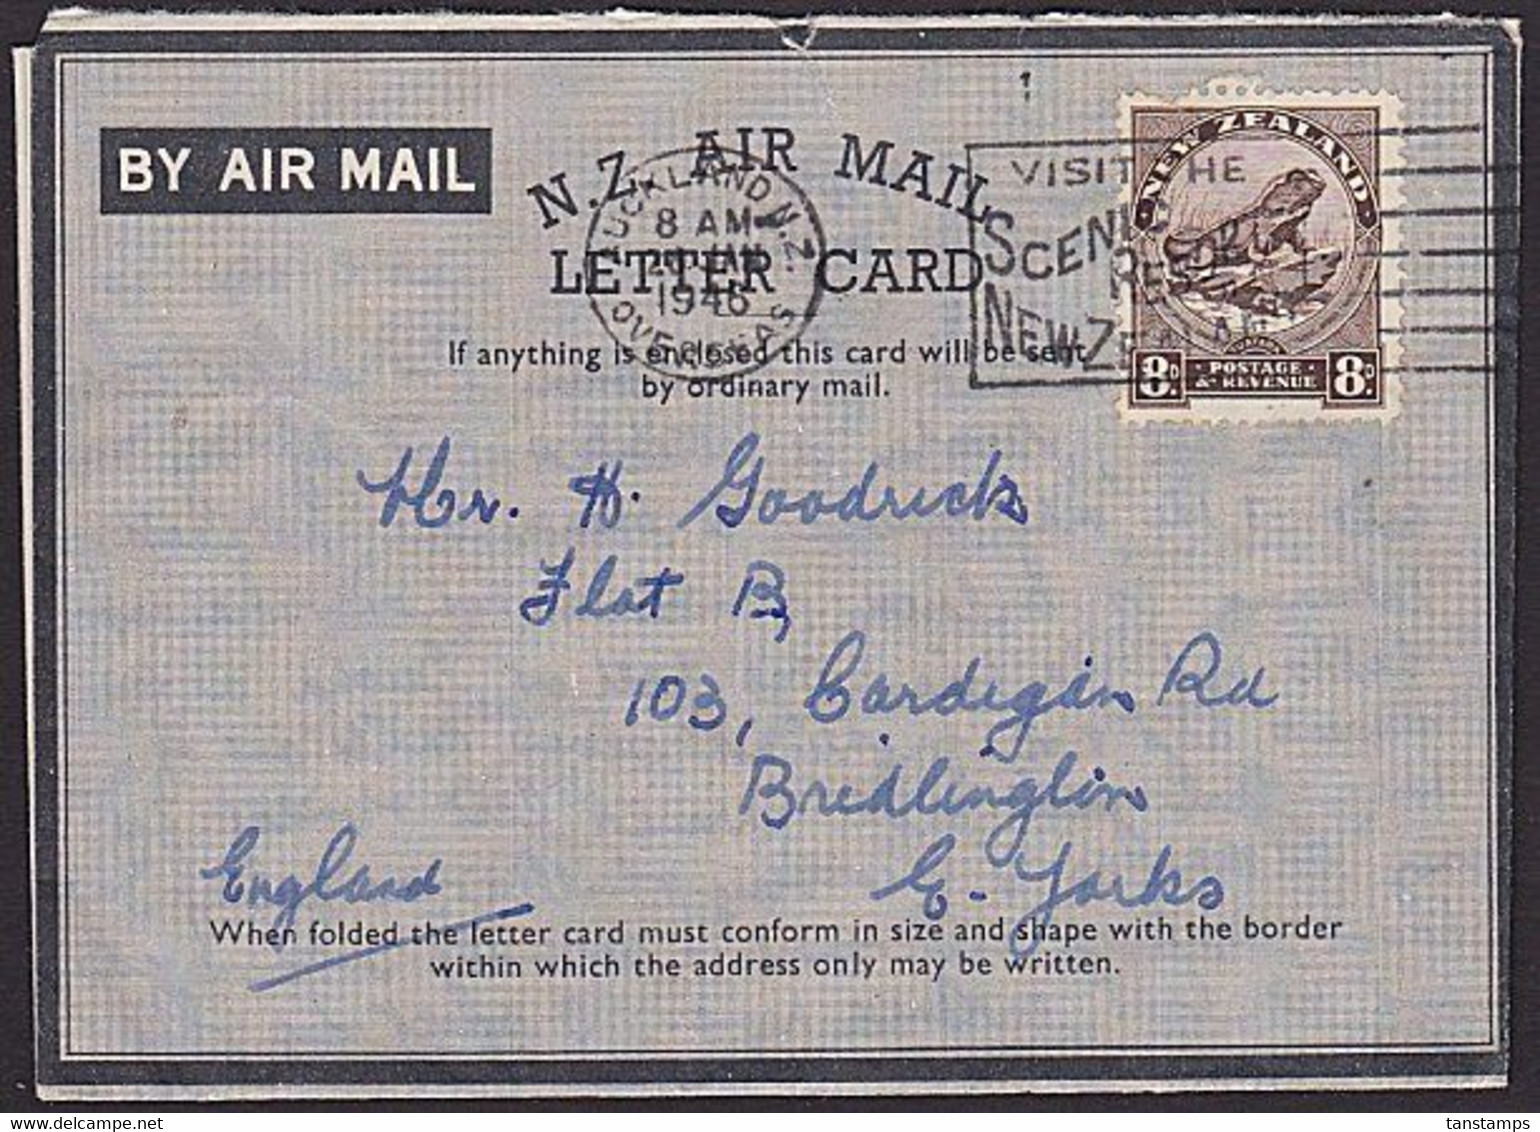 NEW ZEALAND AEROGRAM LETTER CARD TUATARA 8d RATE TO UK TOURIST SLOGAN 1946 - Lettres & Documents